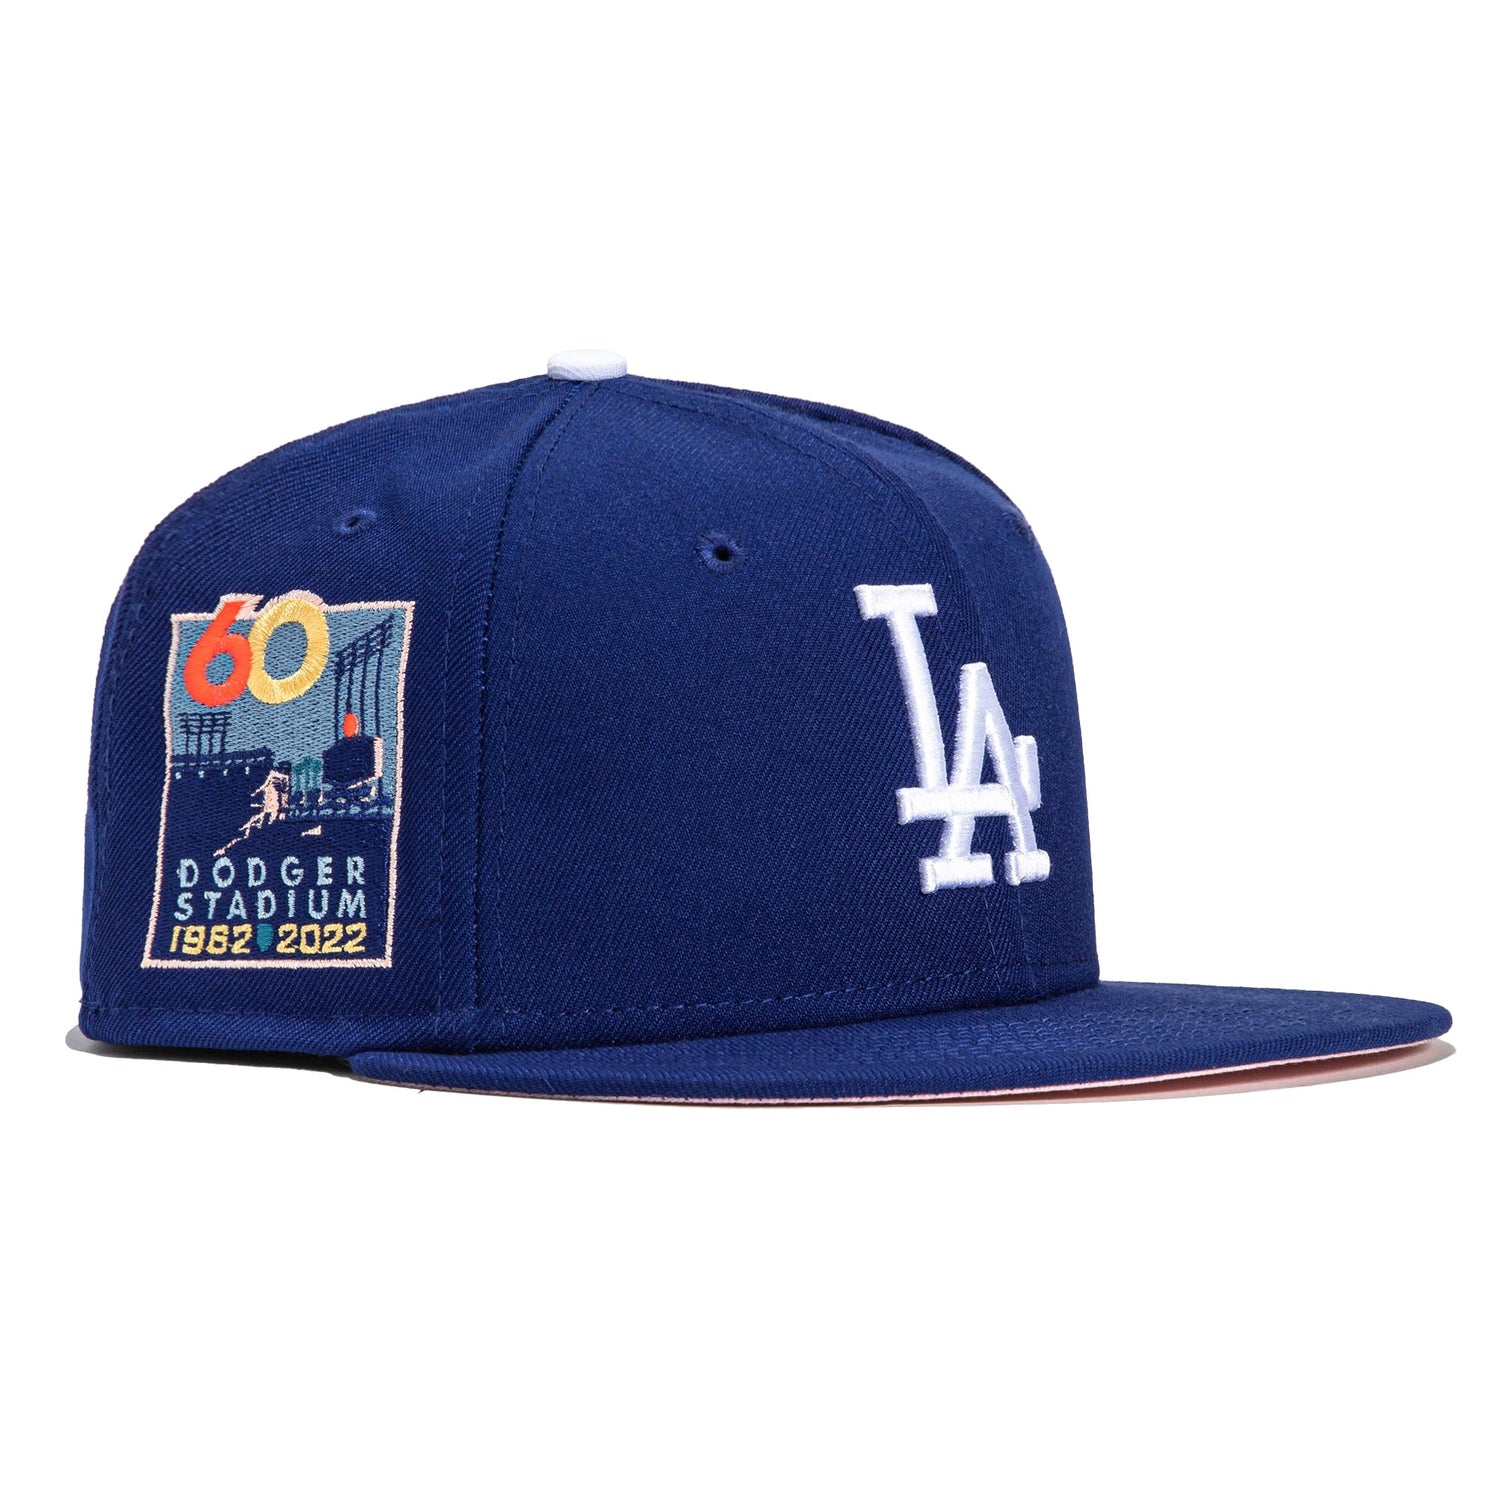 New Era 59Fifty Los Angeles Dodgers 60th Anniversary Stadium Patch Apr